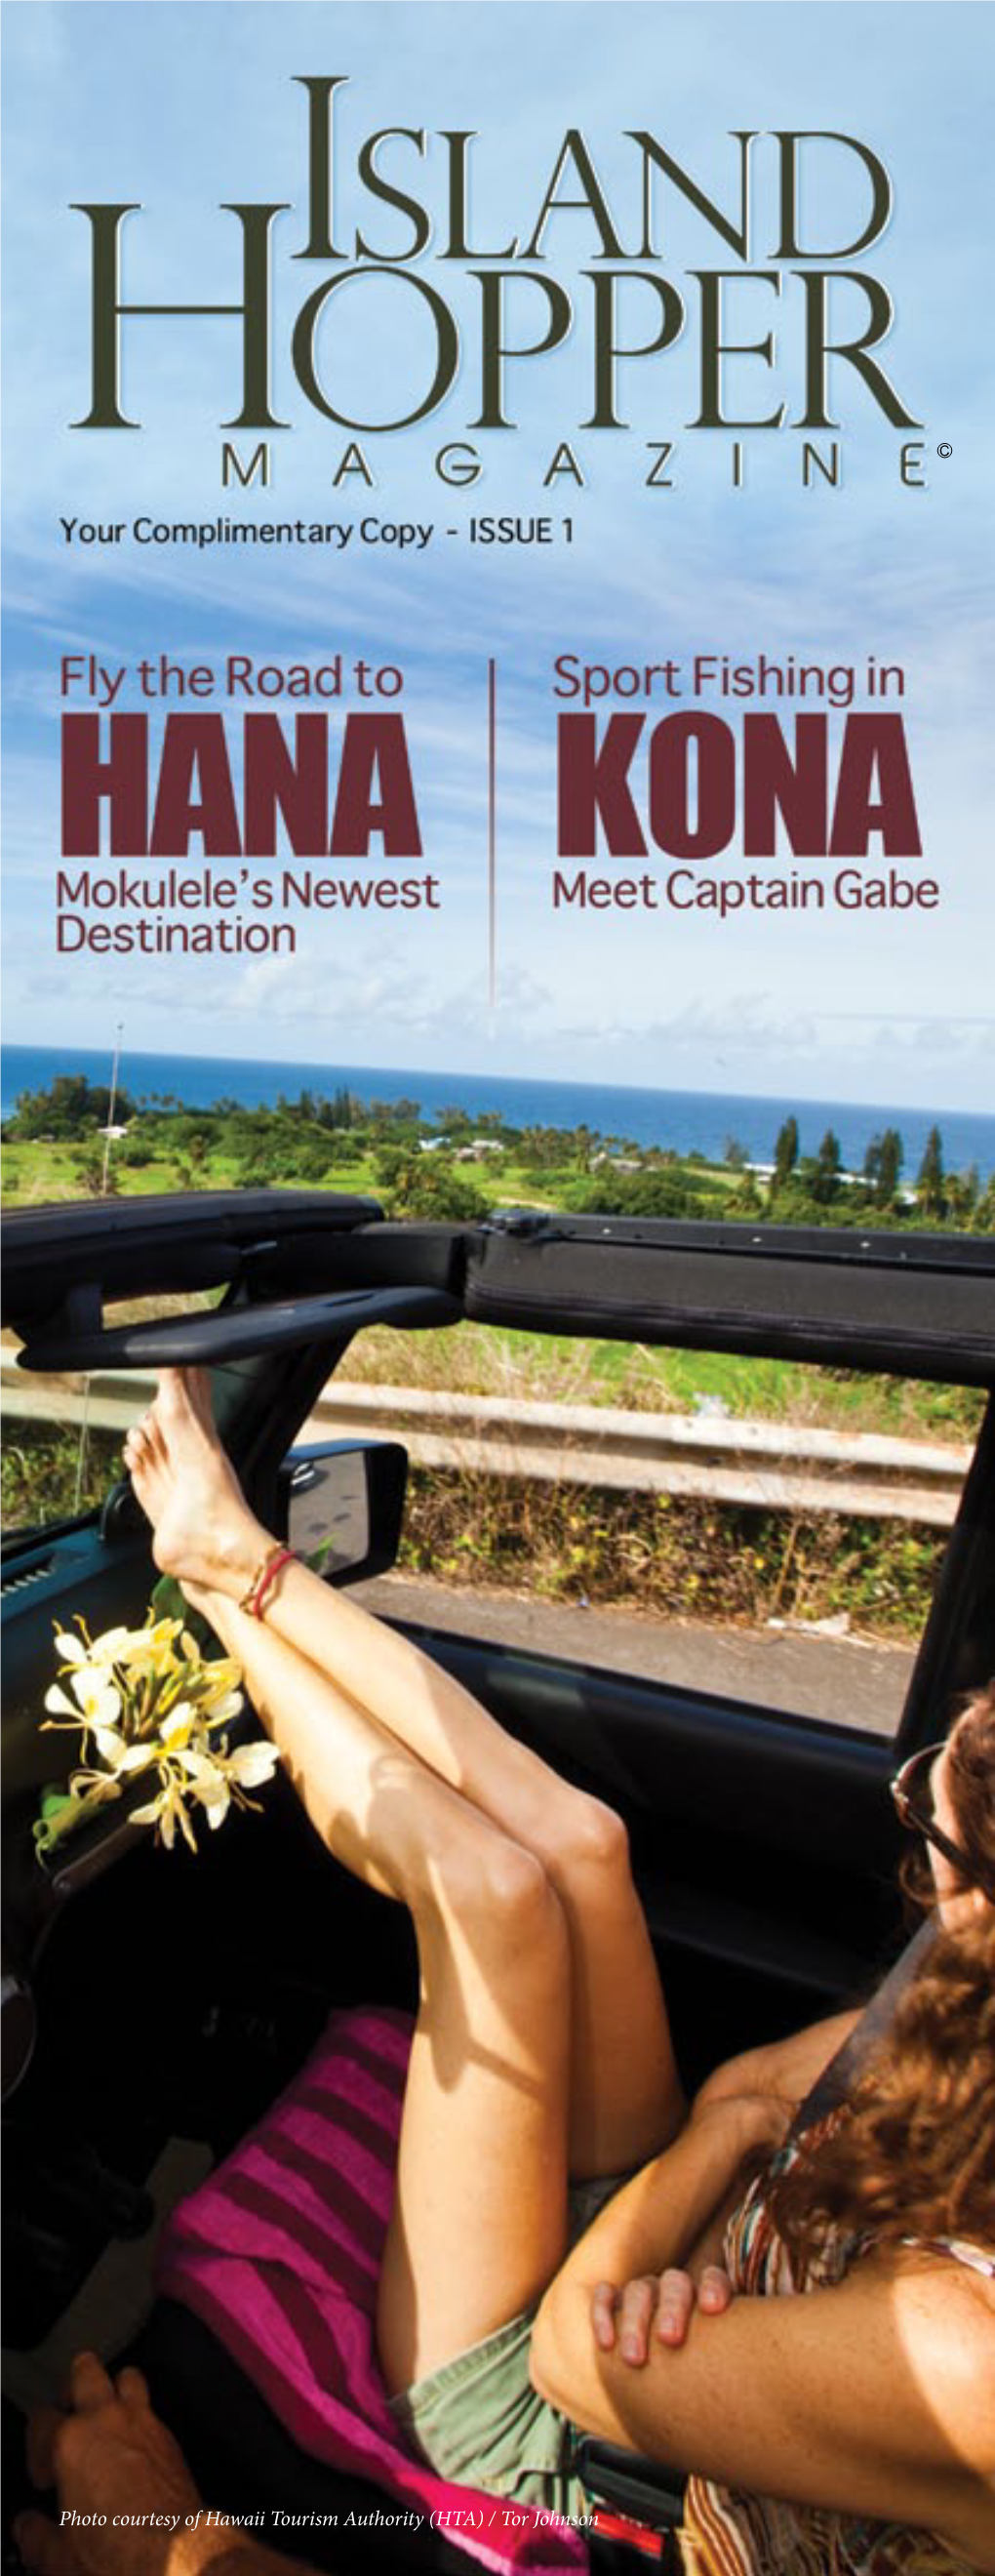 Photo Courtesy of Hawaii Tourism Authority (HTA) / Tor Johnson